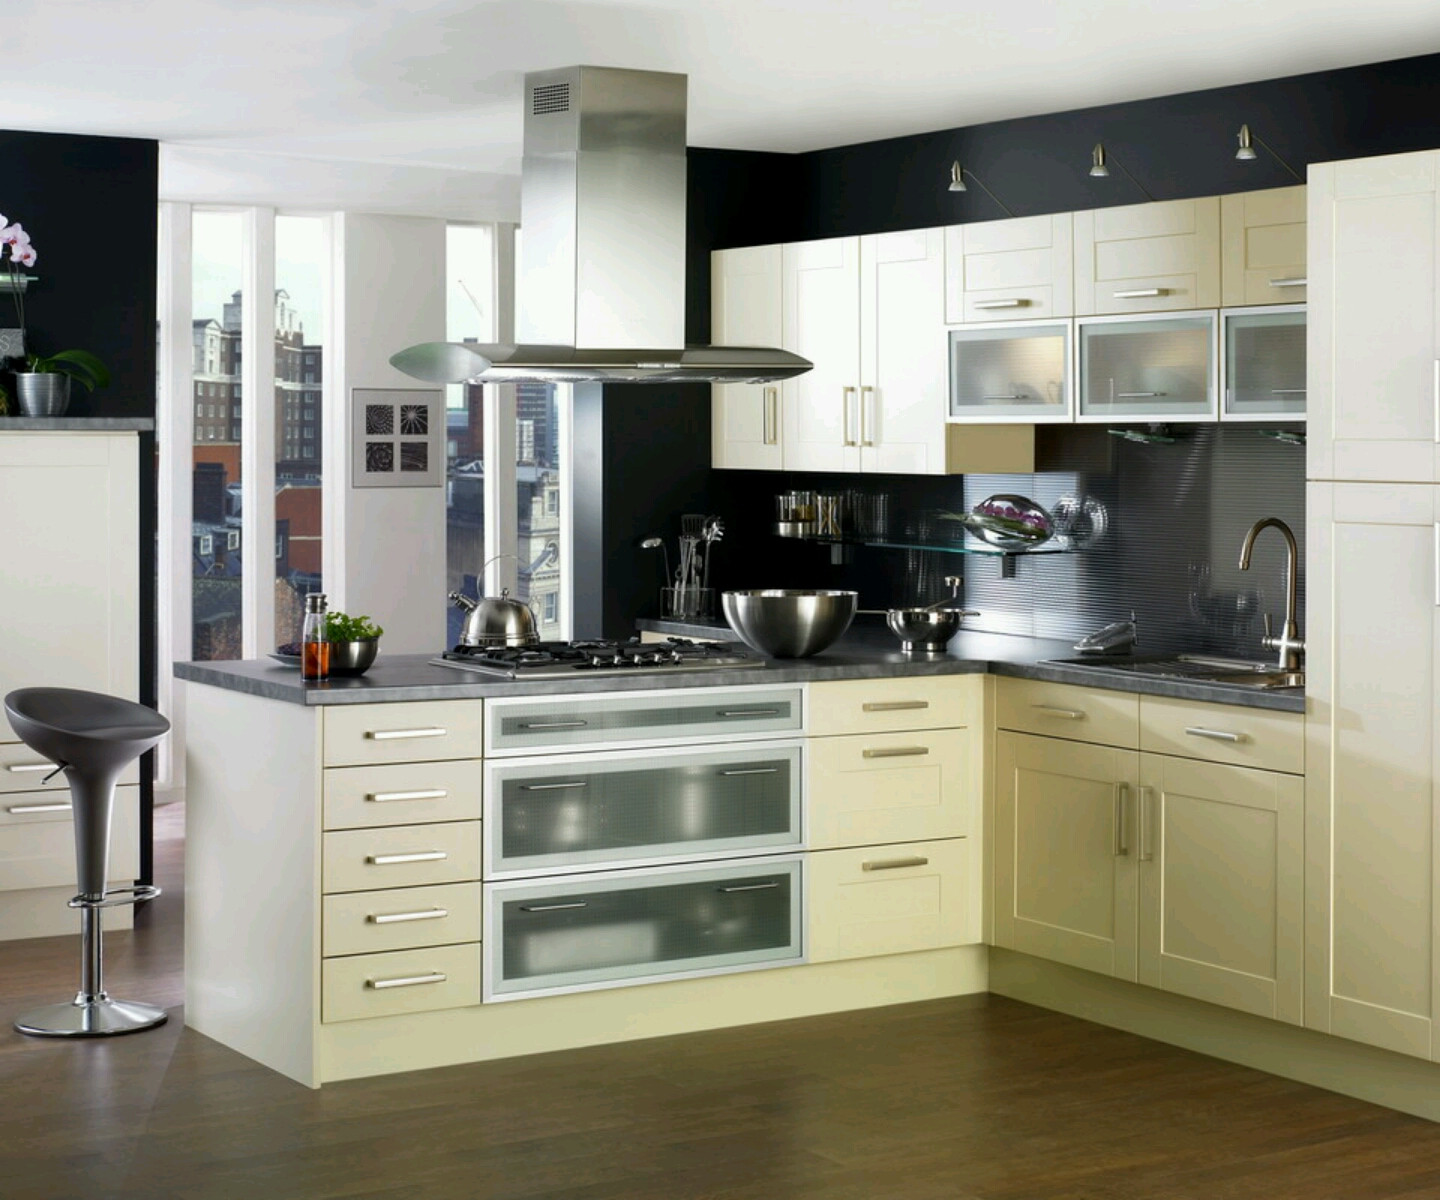 Kitchen Cabinets Design Ideas
 New home designs latest Kitchen cabinets designs modern